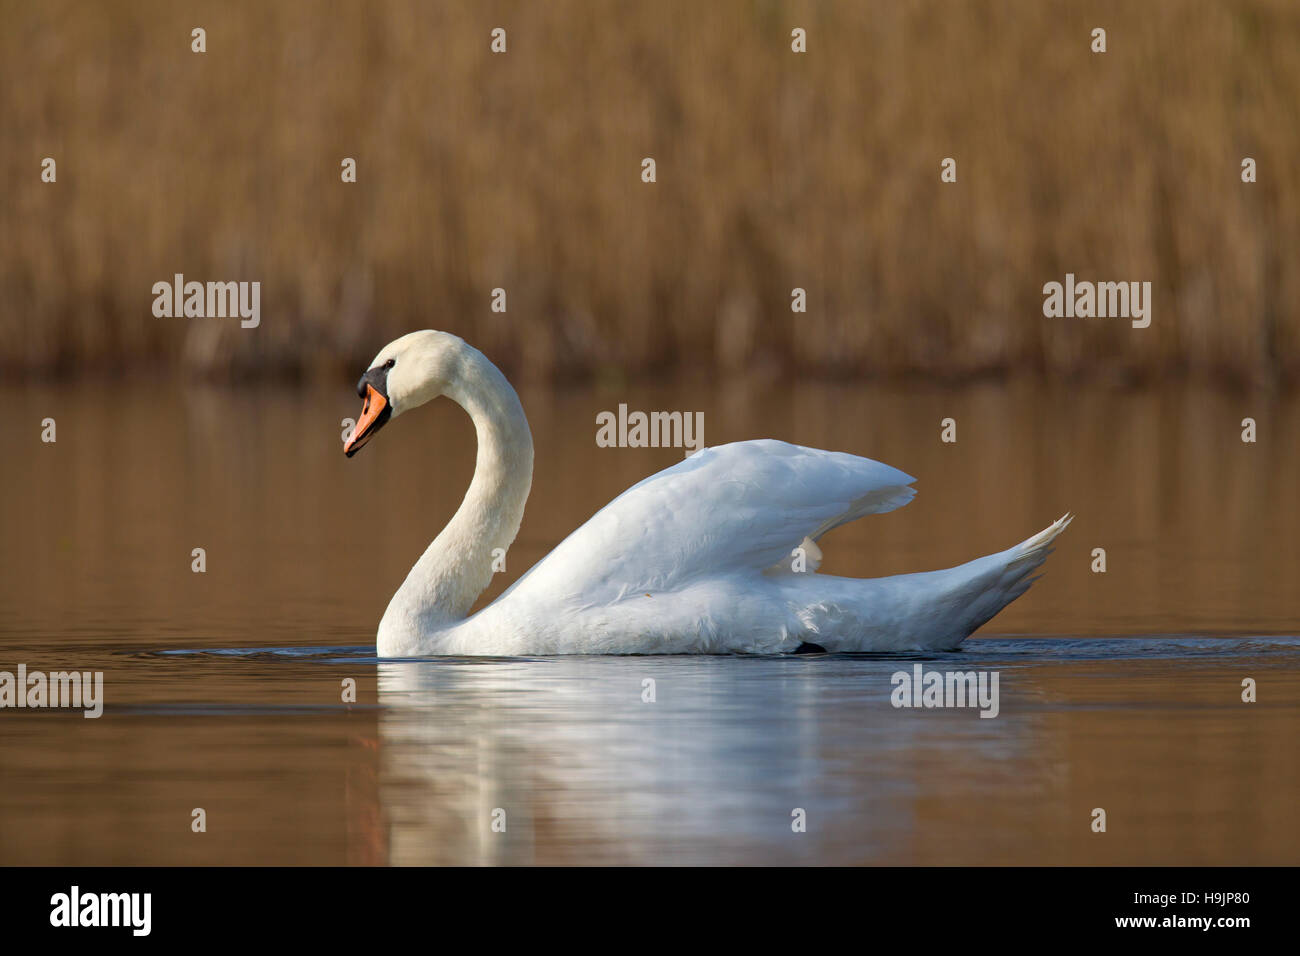 Cisne (Cygnus olor) hembra nadar en el lago en la primavera Foto de stock